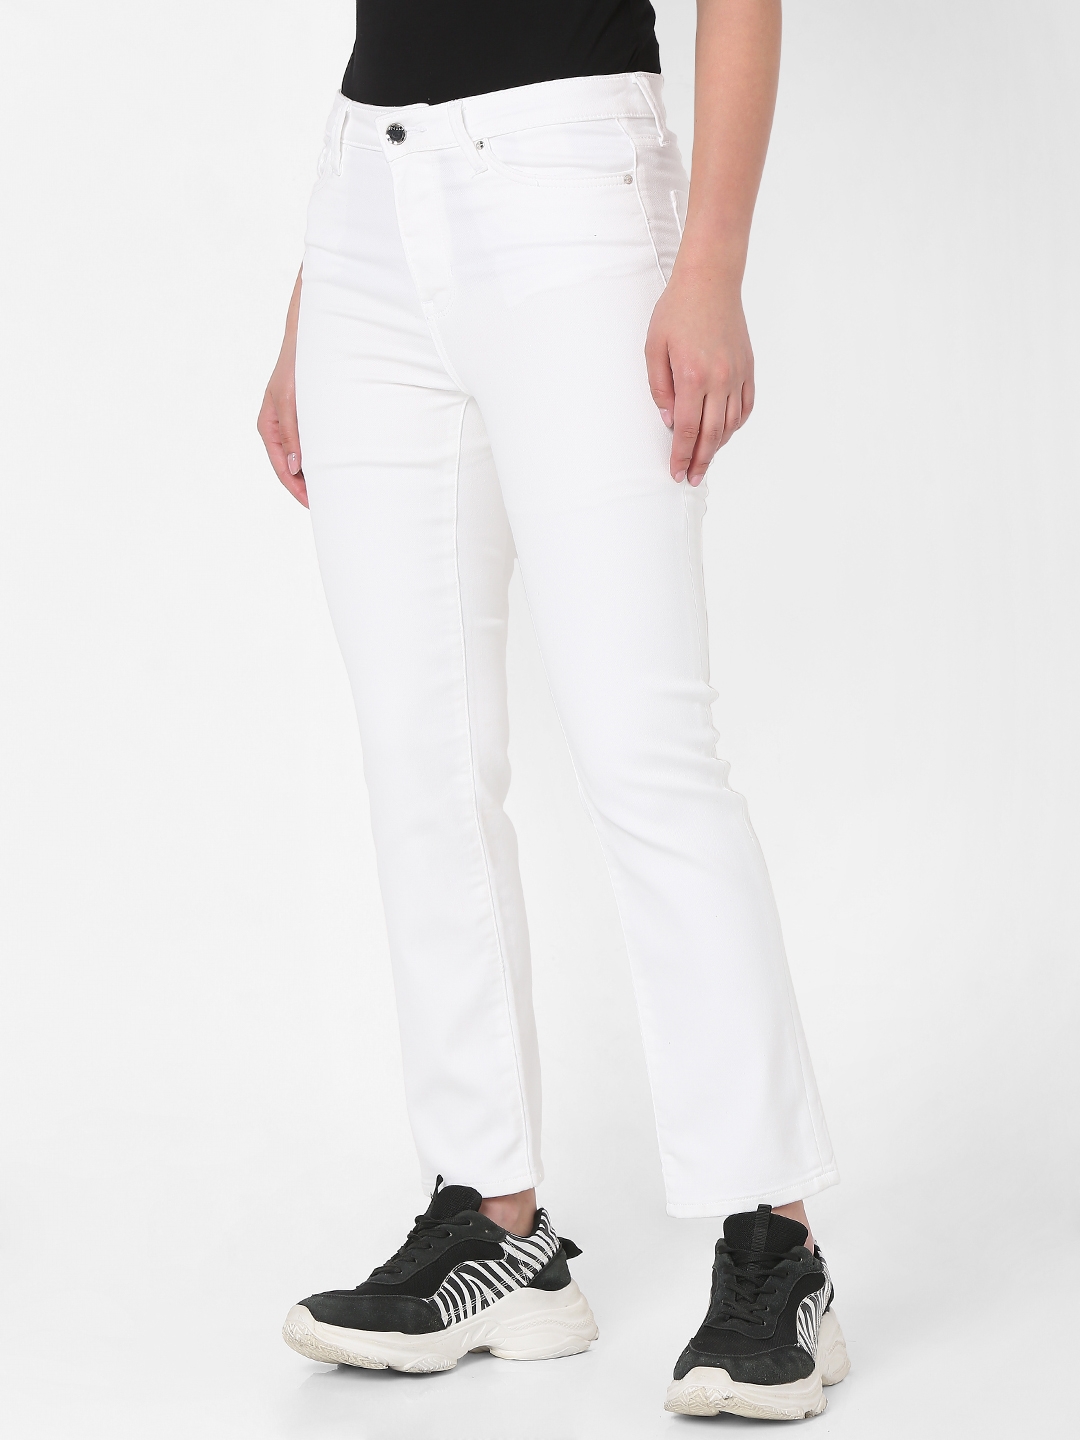 spykar | Women's White Cotton Solid Slim Jeans 1